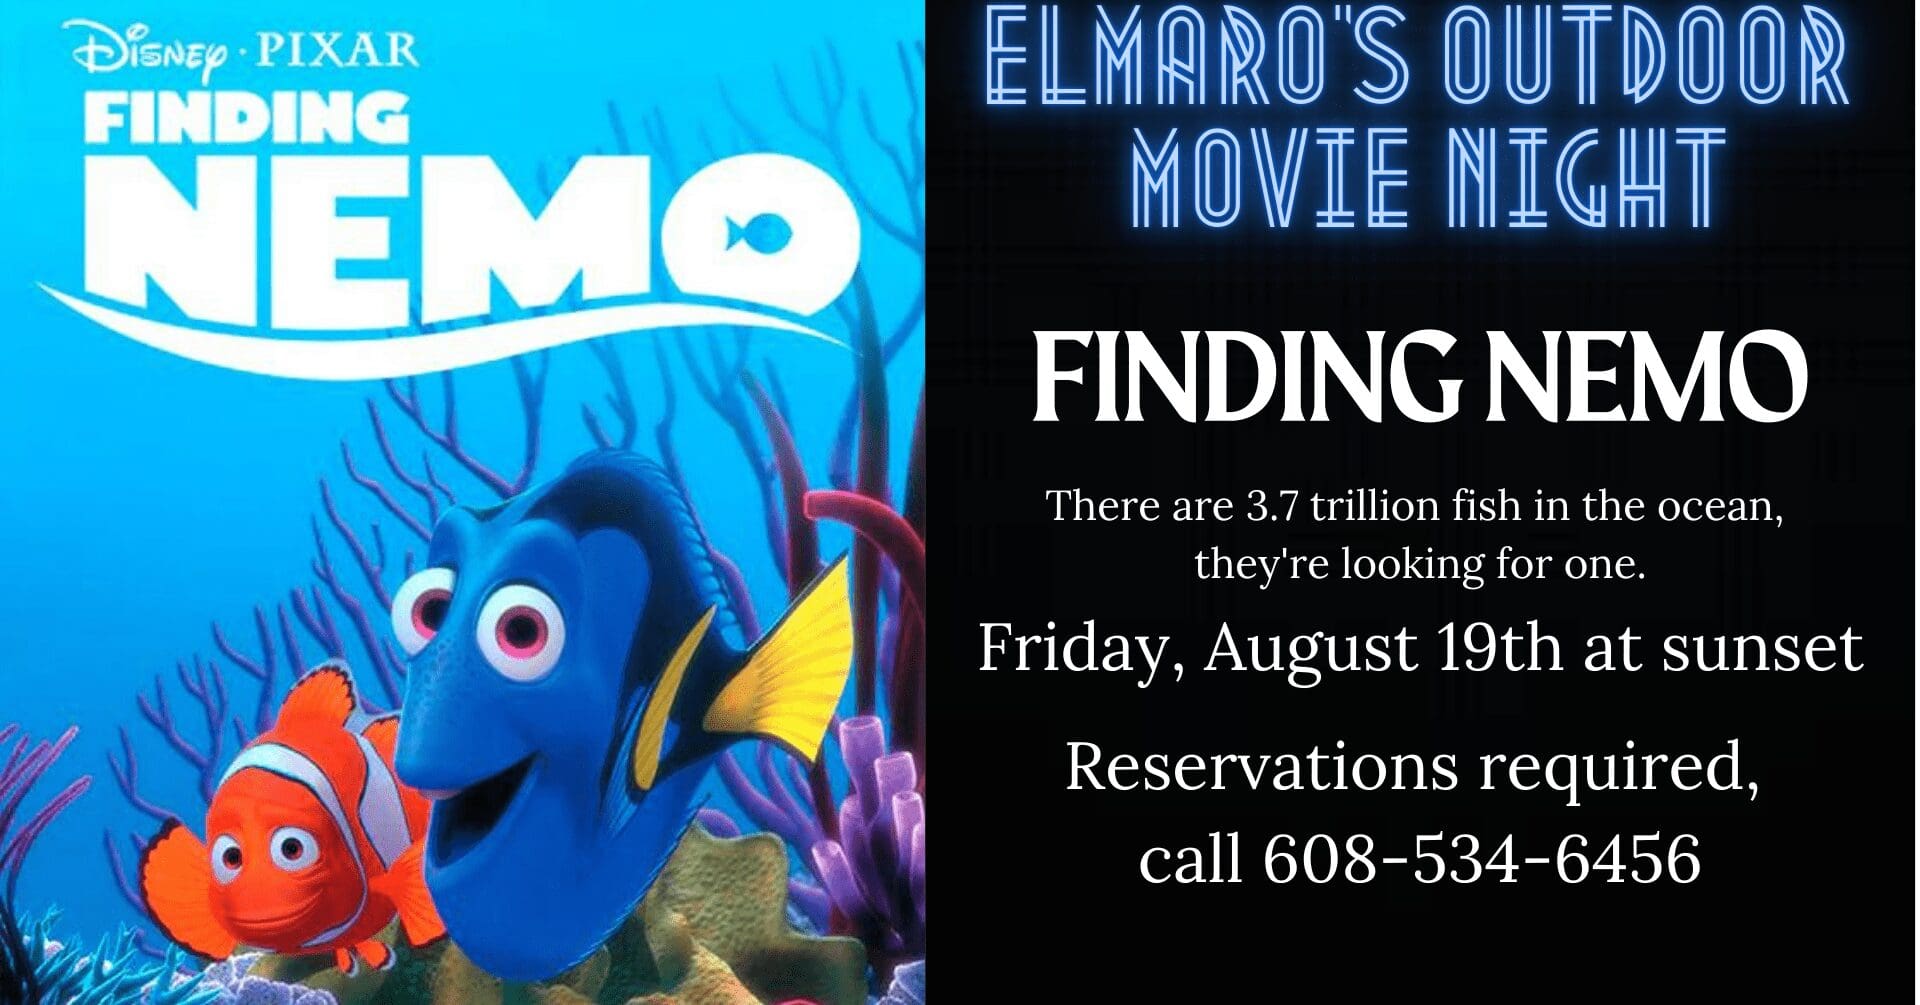 Finding nemo movie night flyer.